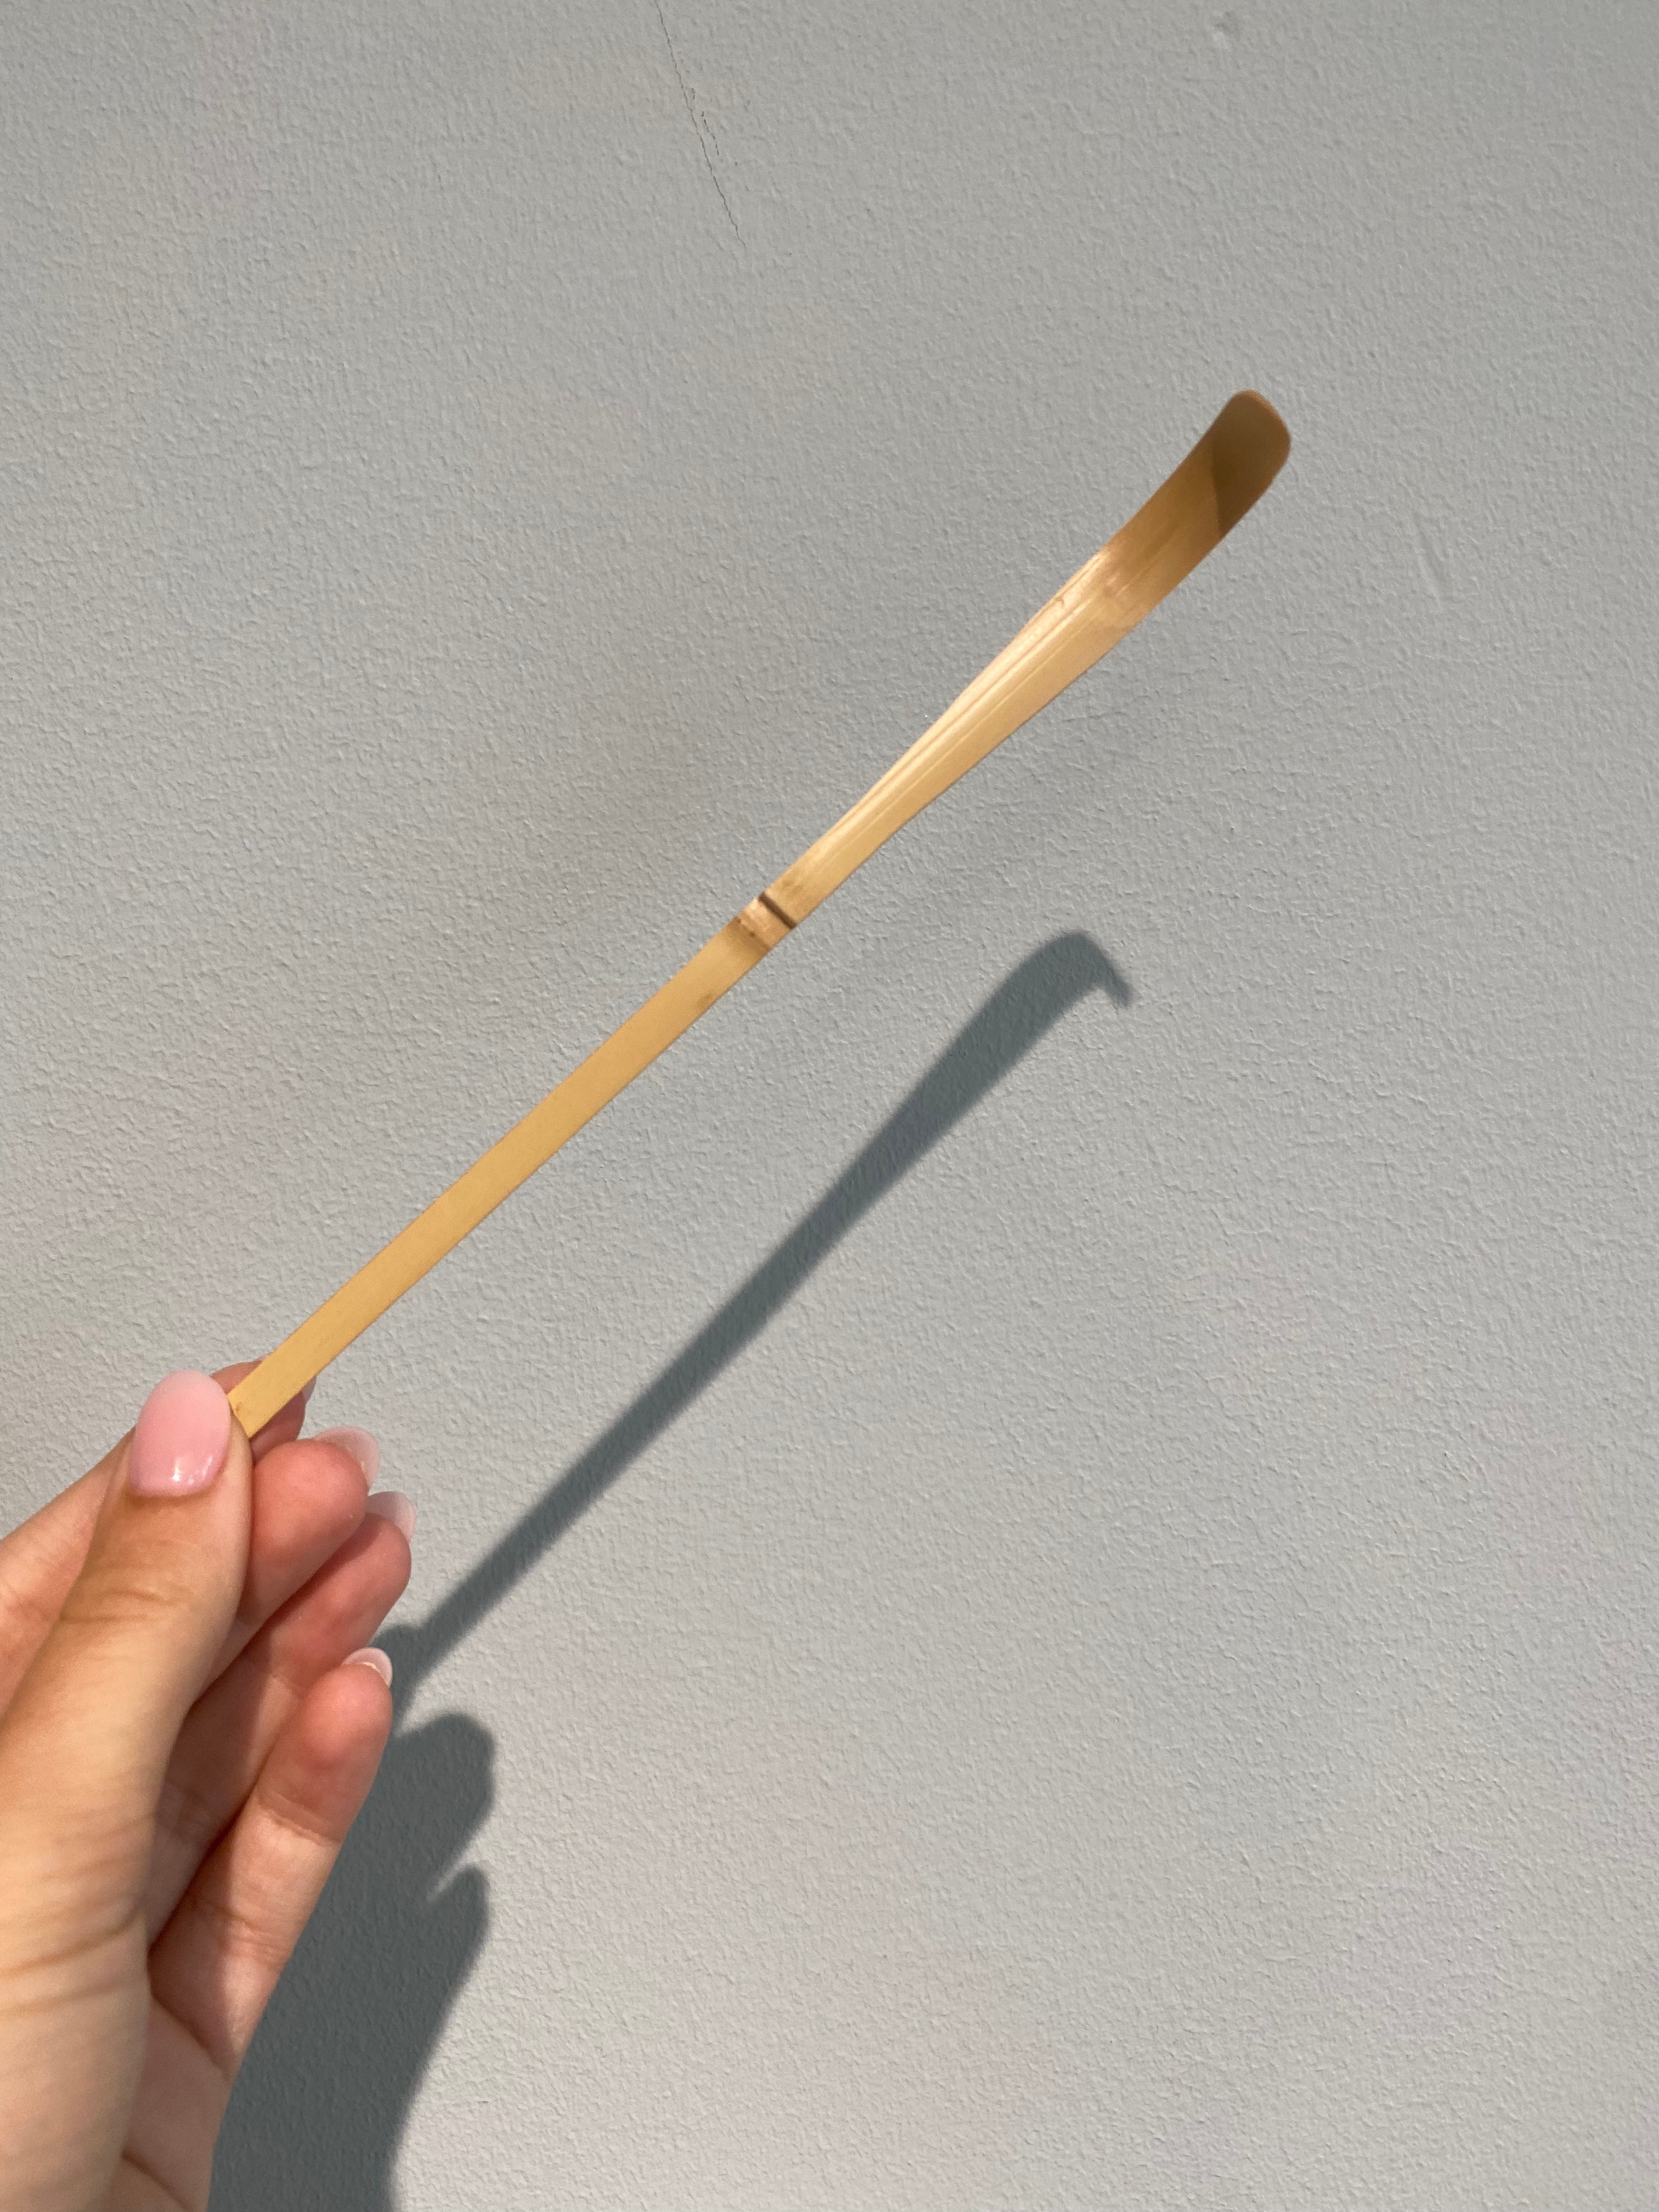 Matcha bamboo spoon